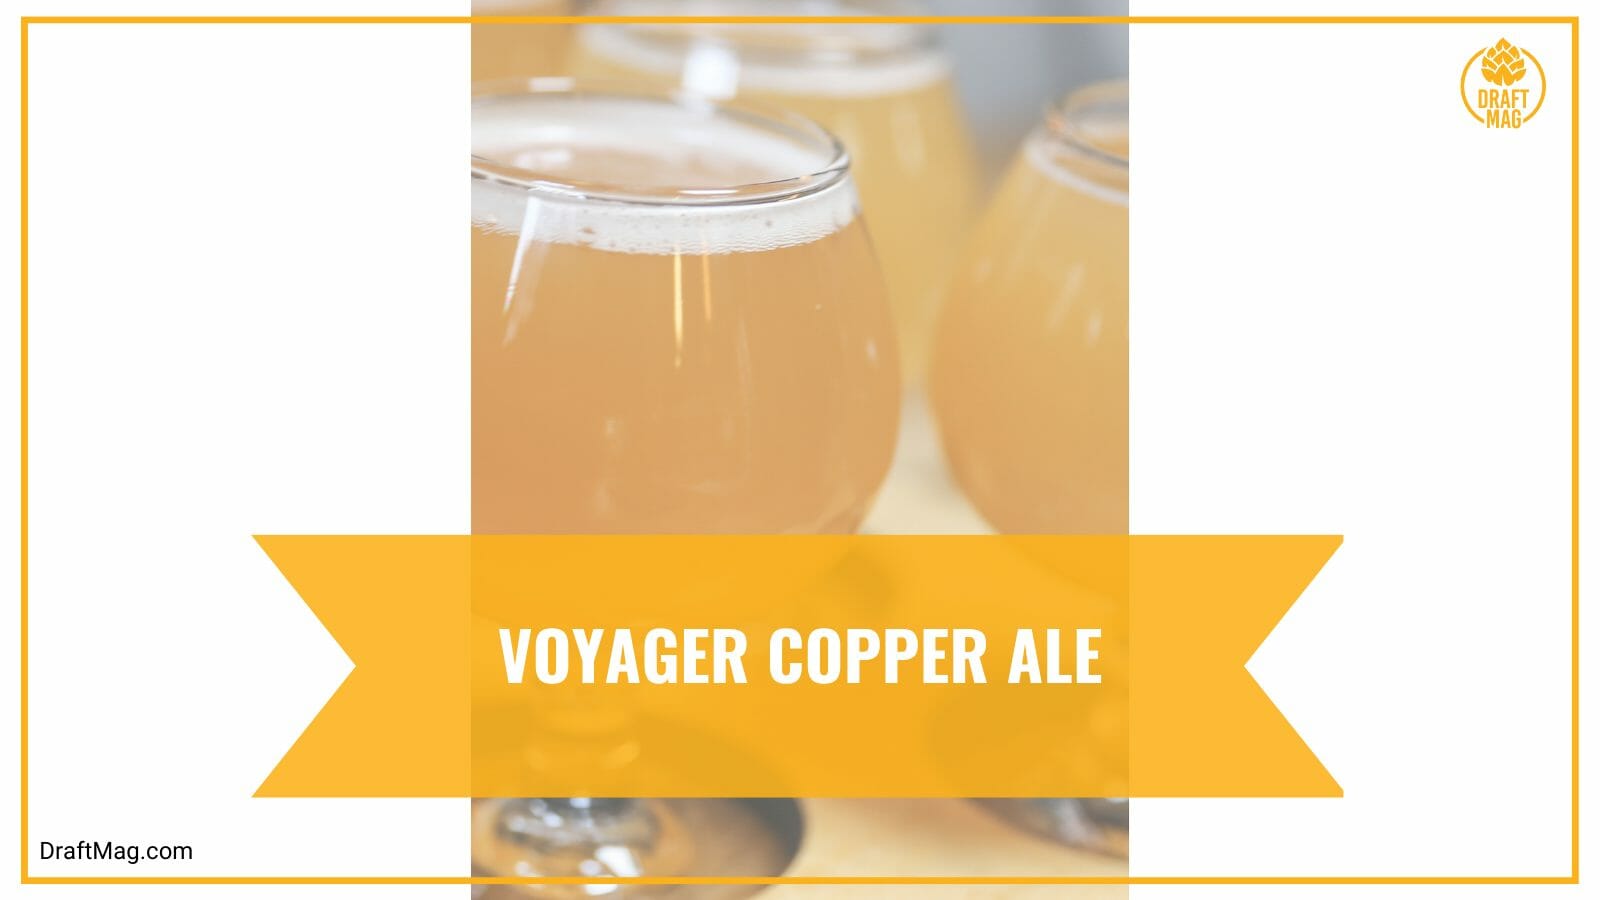 Voyager copper ale